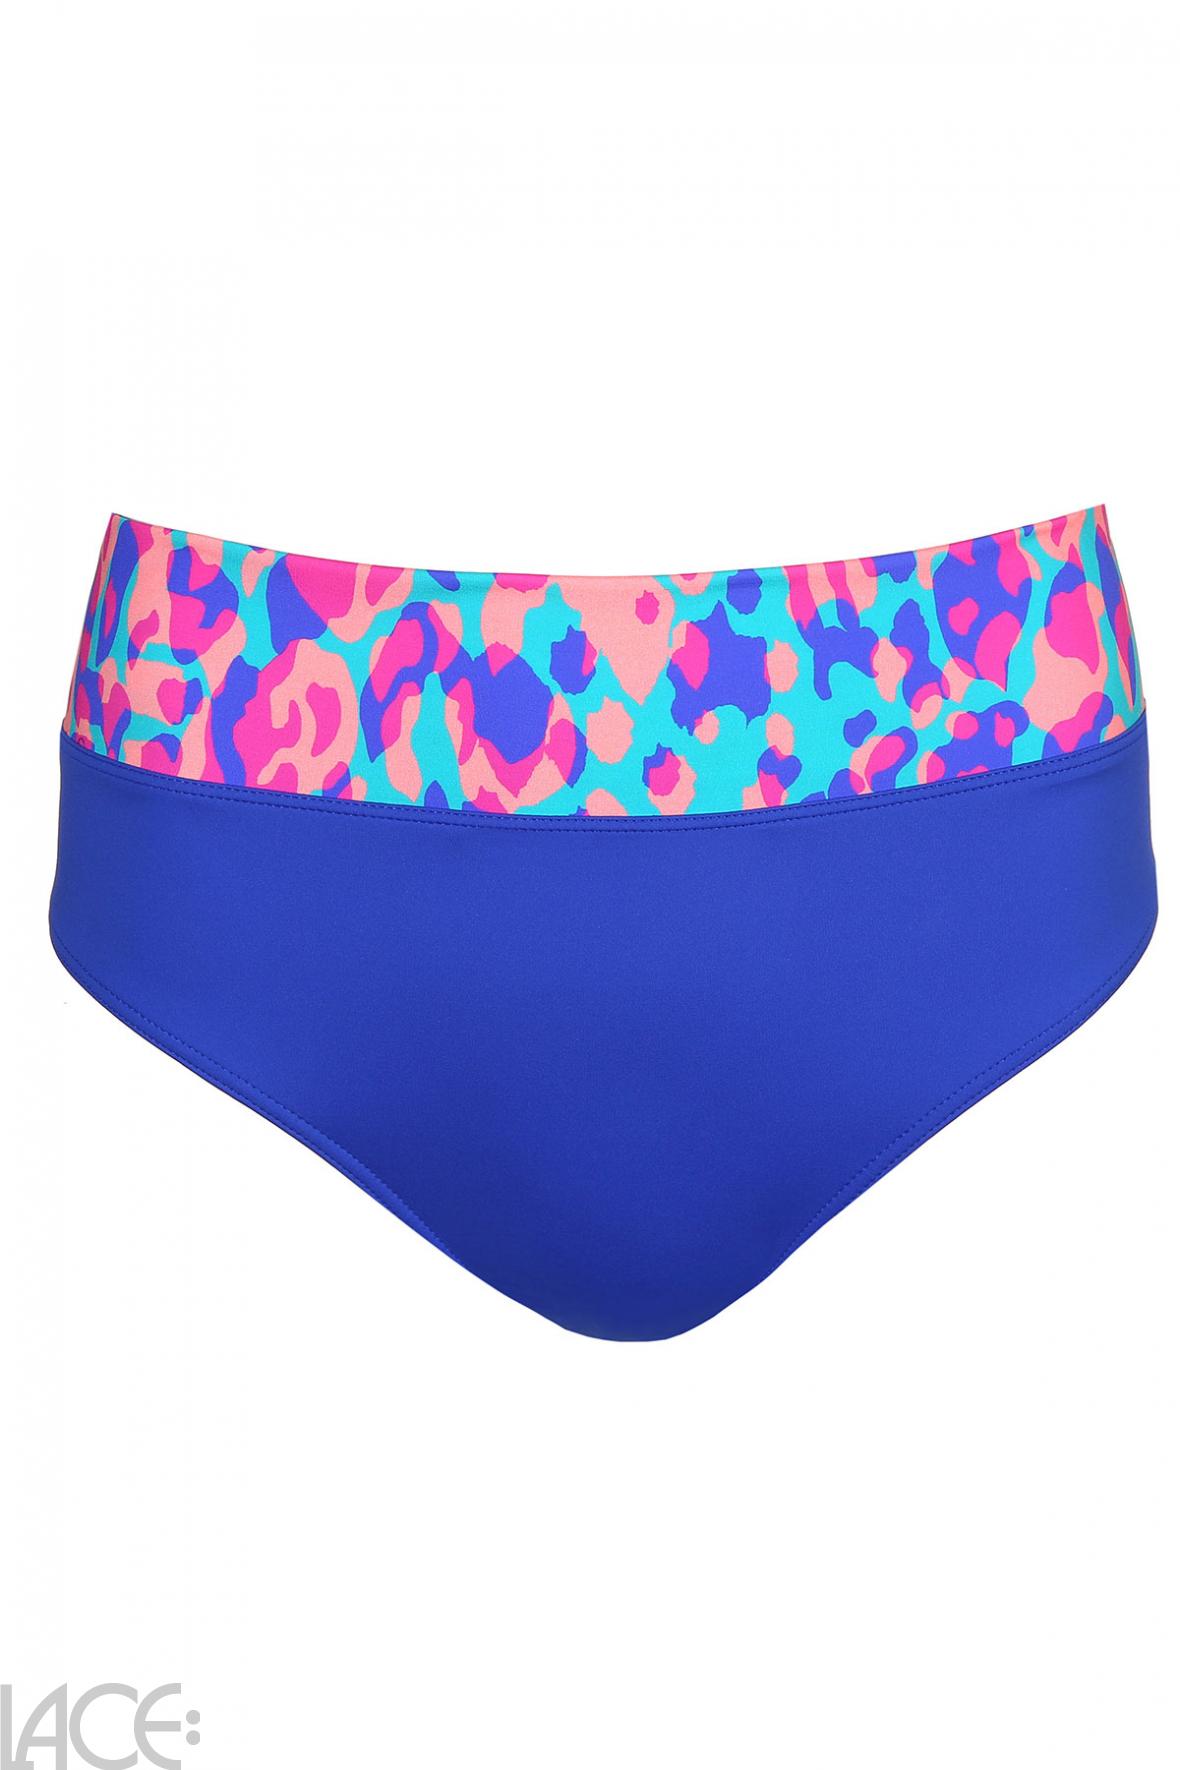 PrimaDonna Swim Karpen Bikini Folded brief ELECTRIC BLUE – Lace ...